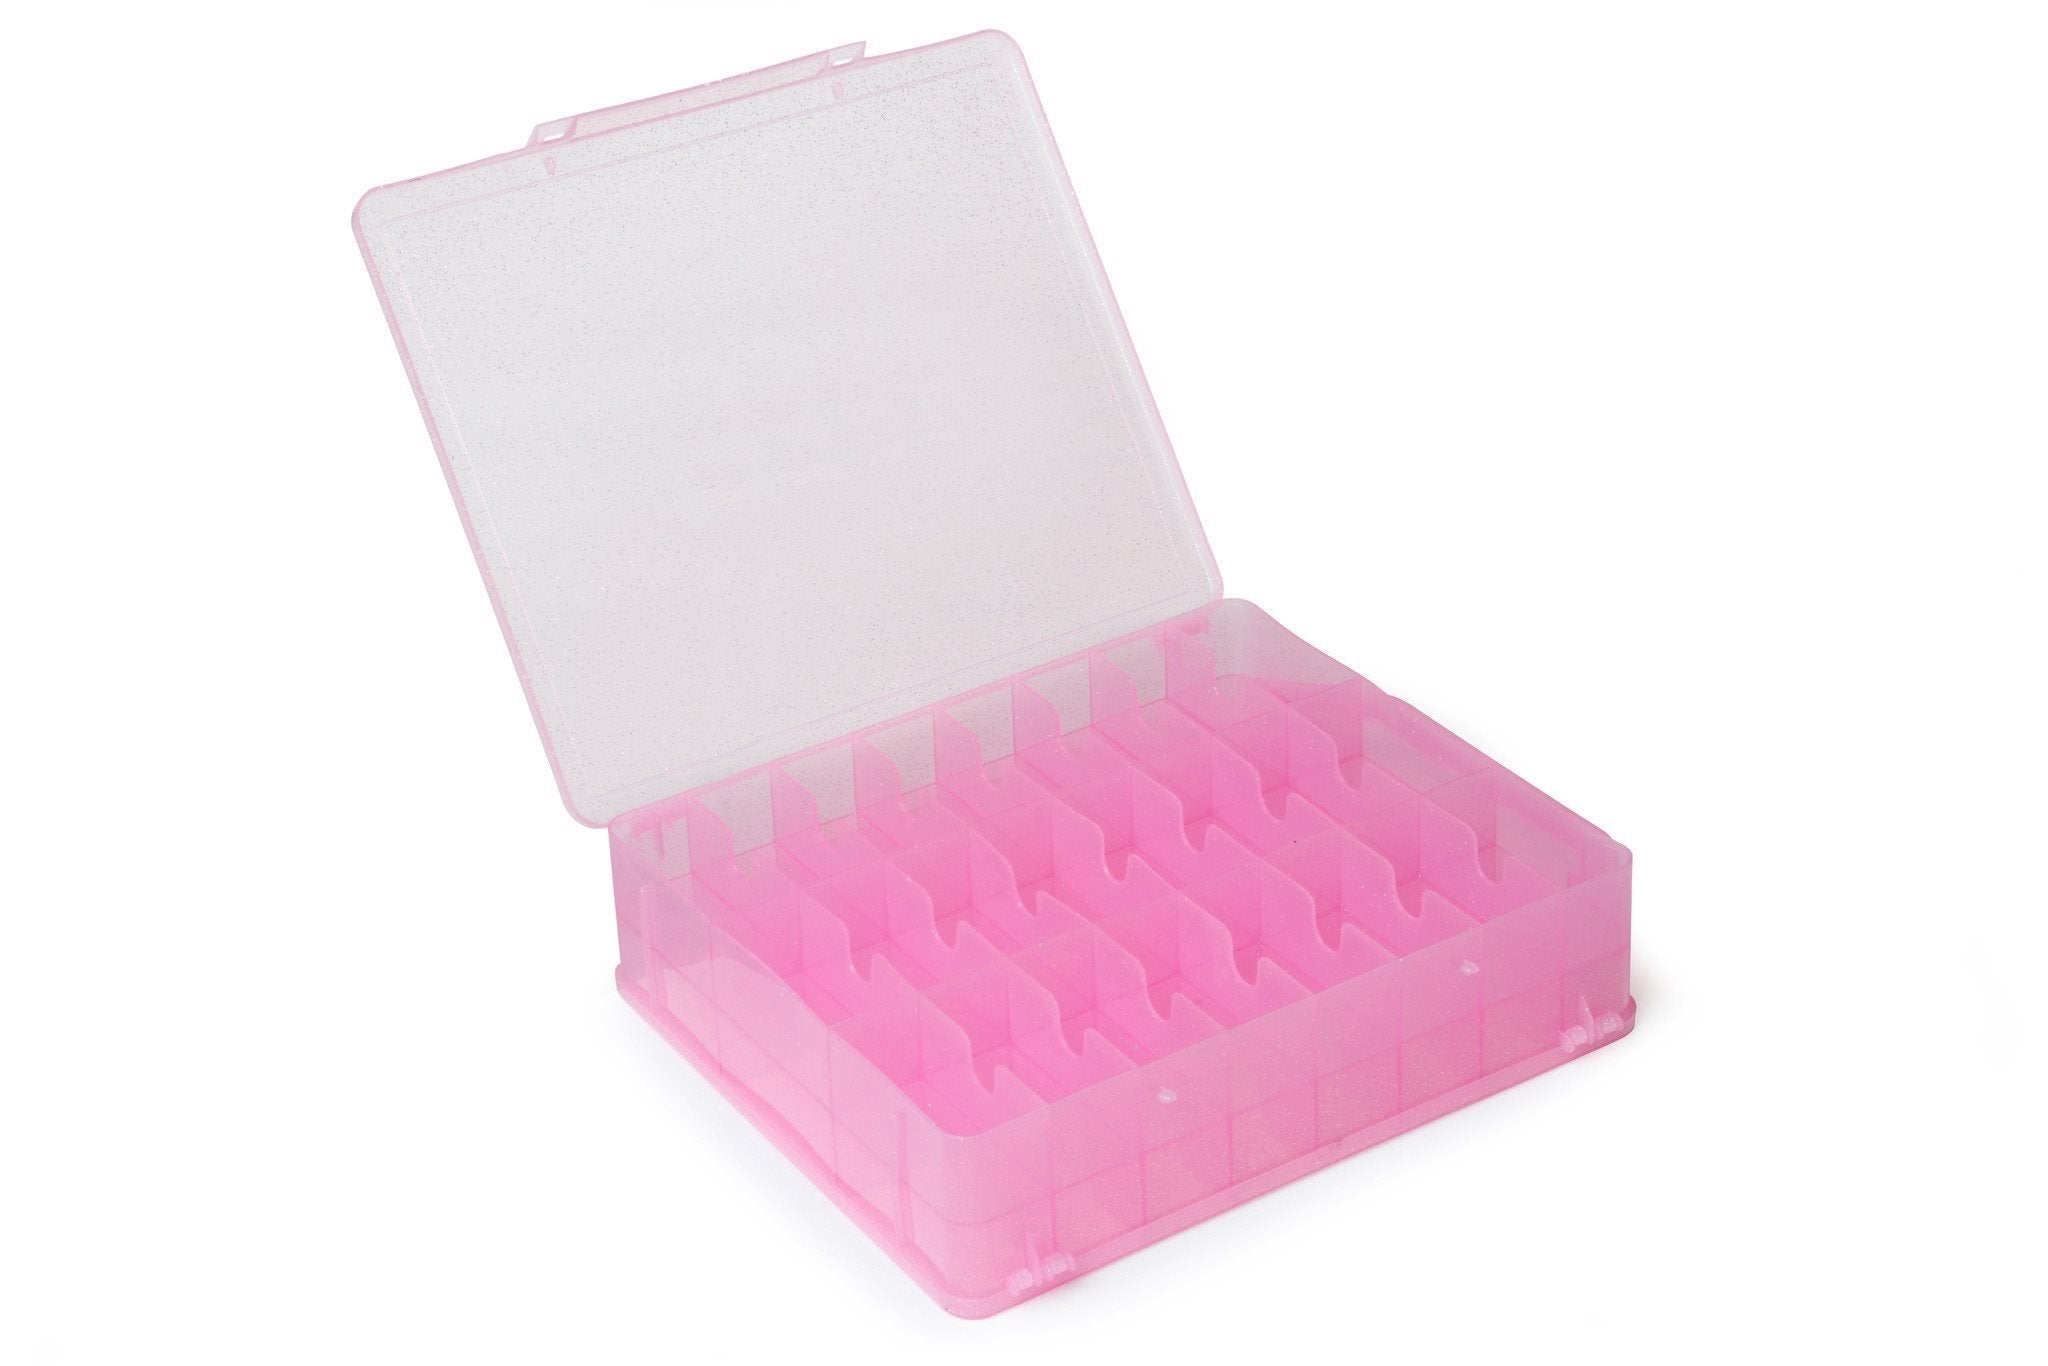 Chroma Gel Nail Polish Case Holder - Pink Glitter, 48 Polishes Capacity, Lightweight & Durable - beautyhair.co.ukChroma Gel